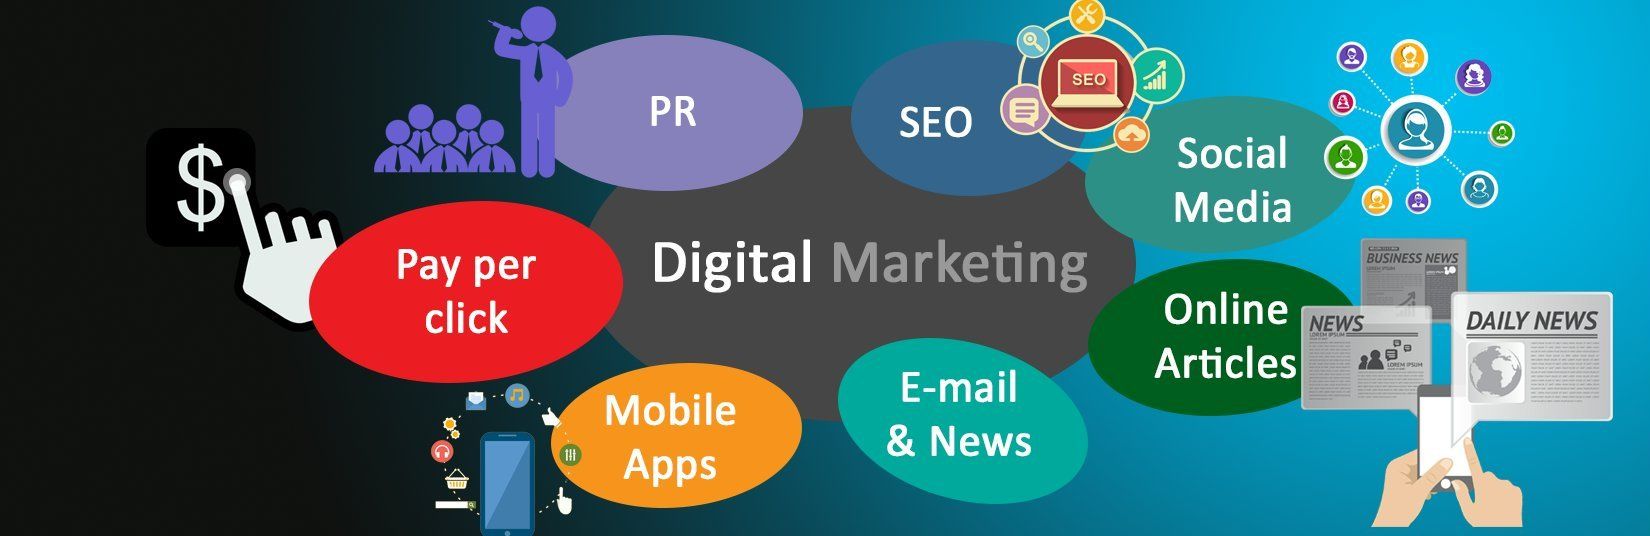 Advantages Of Digital Marketing Over Traditional Marketing 1